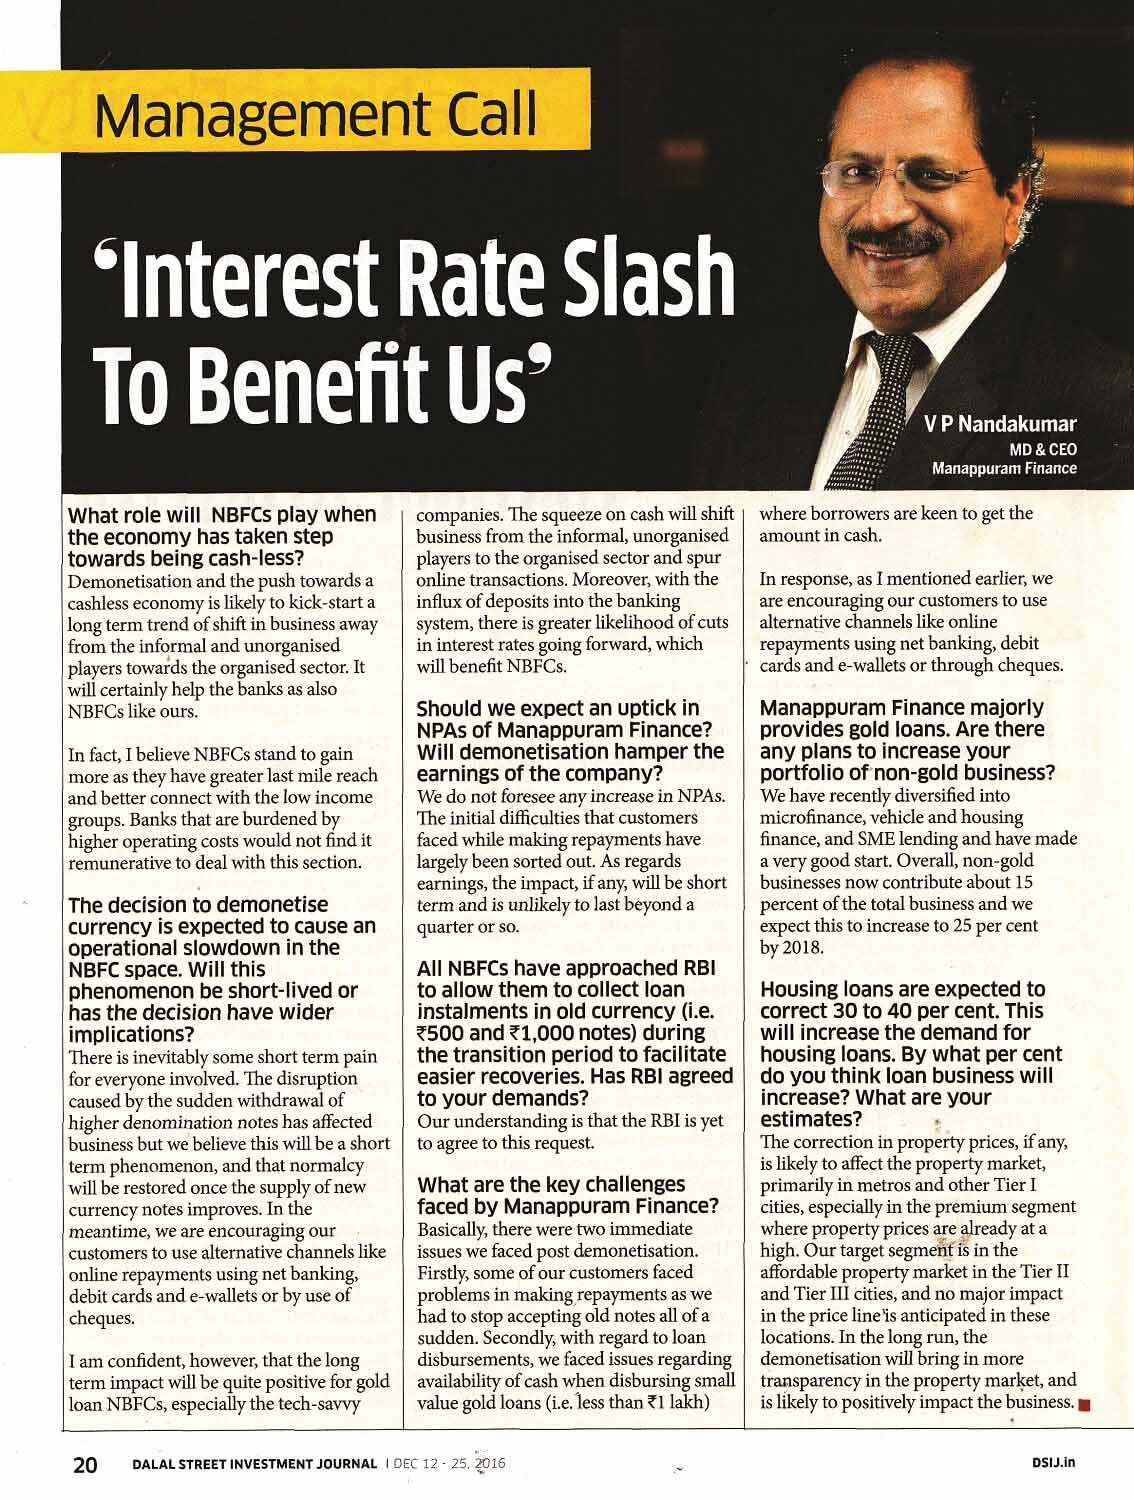 "Interest rate slash to benefit us" – Mr. V. P. Nandakumar, MD & CEO, Manappuram Finance Limited. image